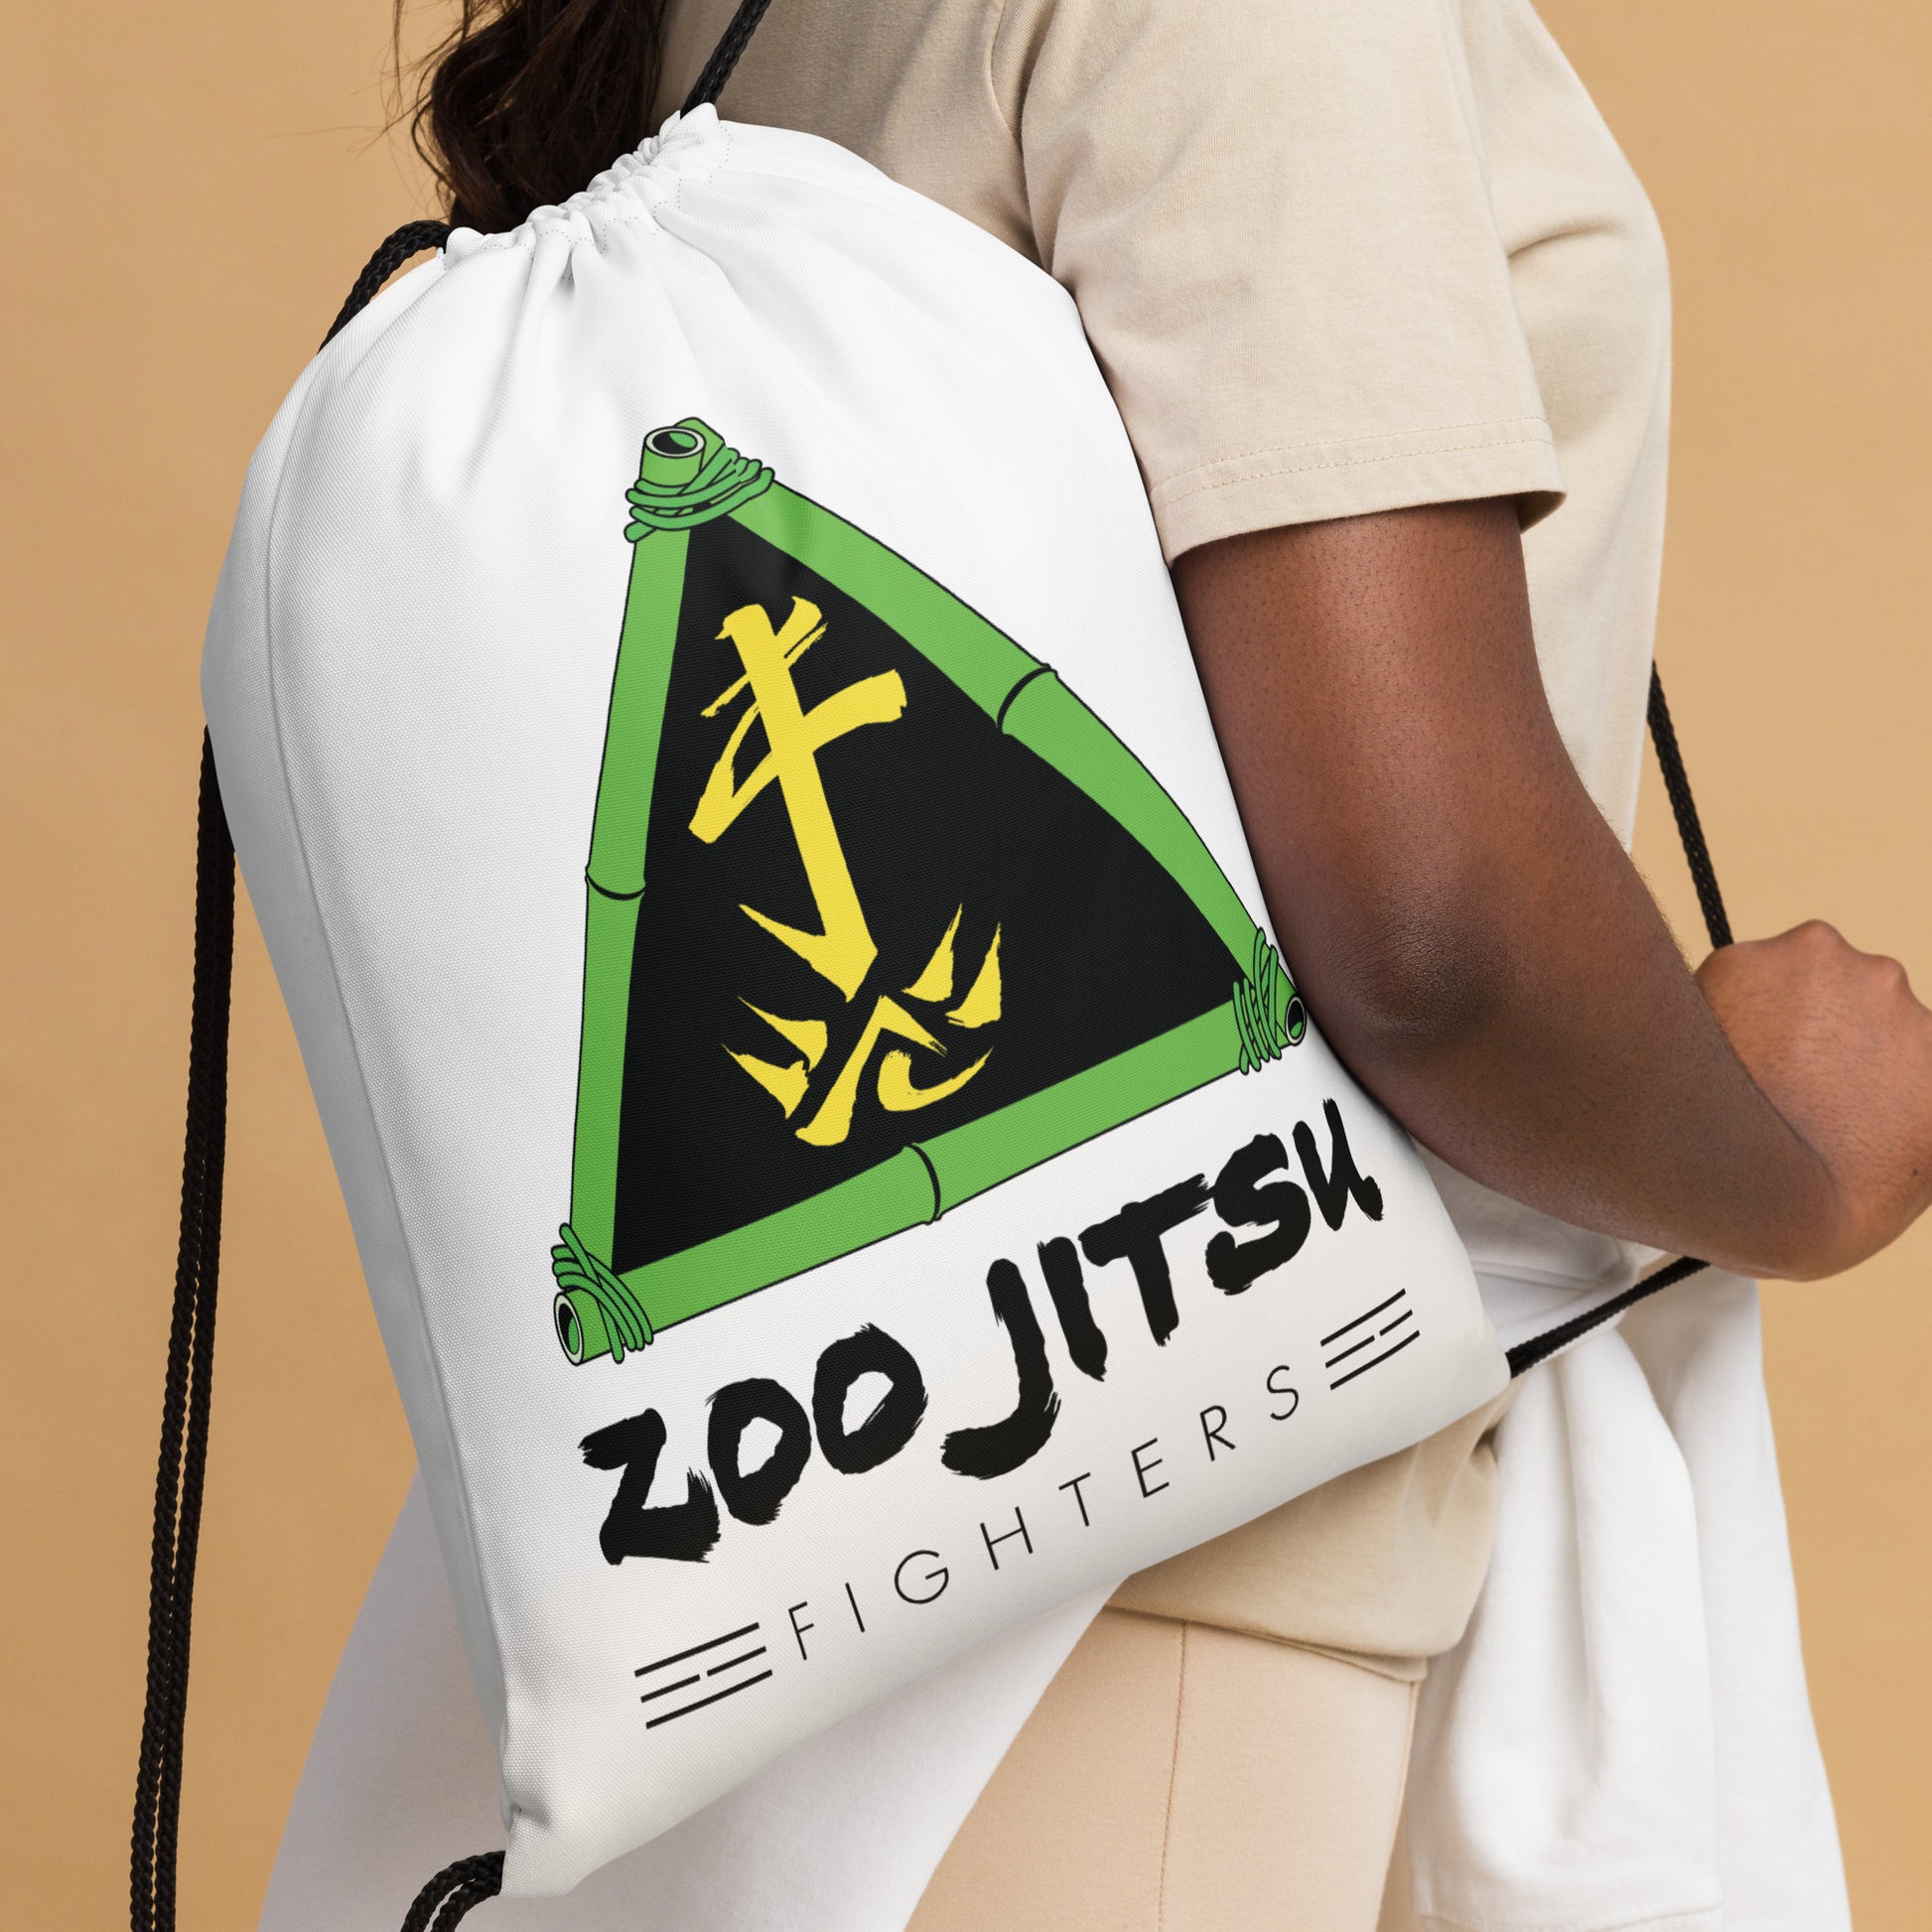 Zoo Jitsu Fighters Drawstring bag - Icon Heroes 